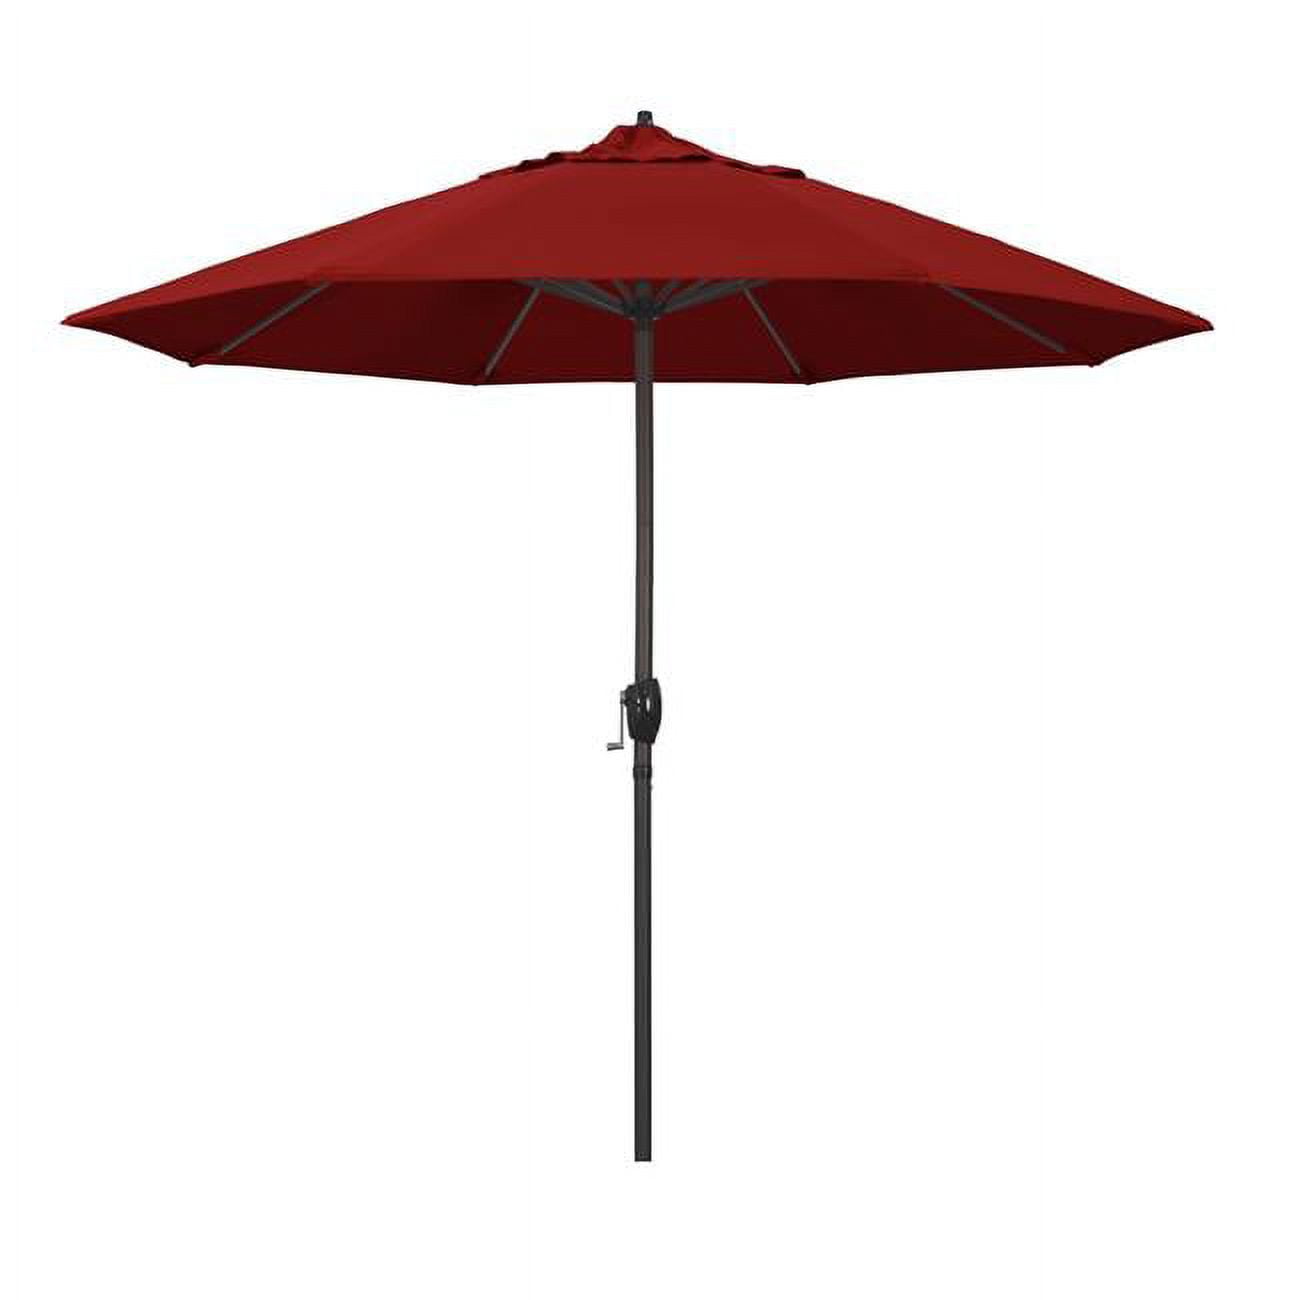 Ata908117-5403 9 Ft. Casa Series Patio Bronze Auto Tilt Crank Lift - Sunbrella 2a Jockey Red Fabric